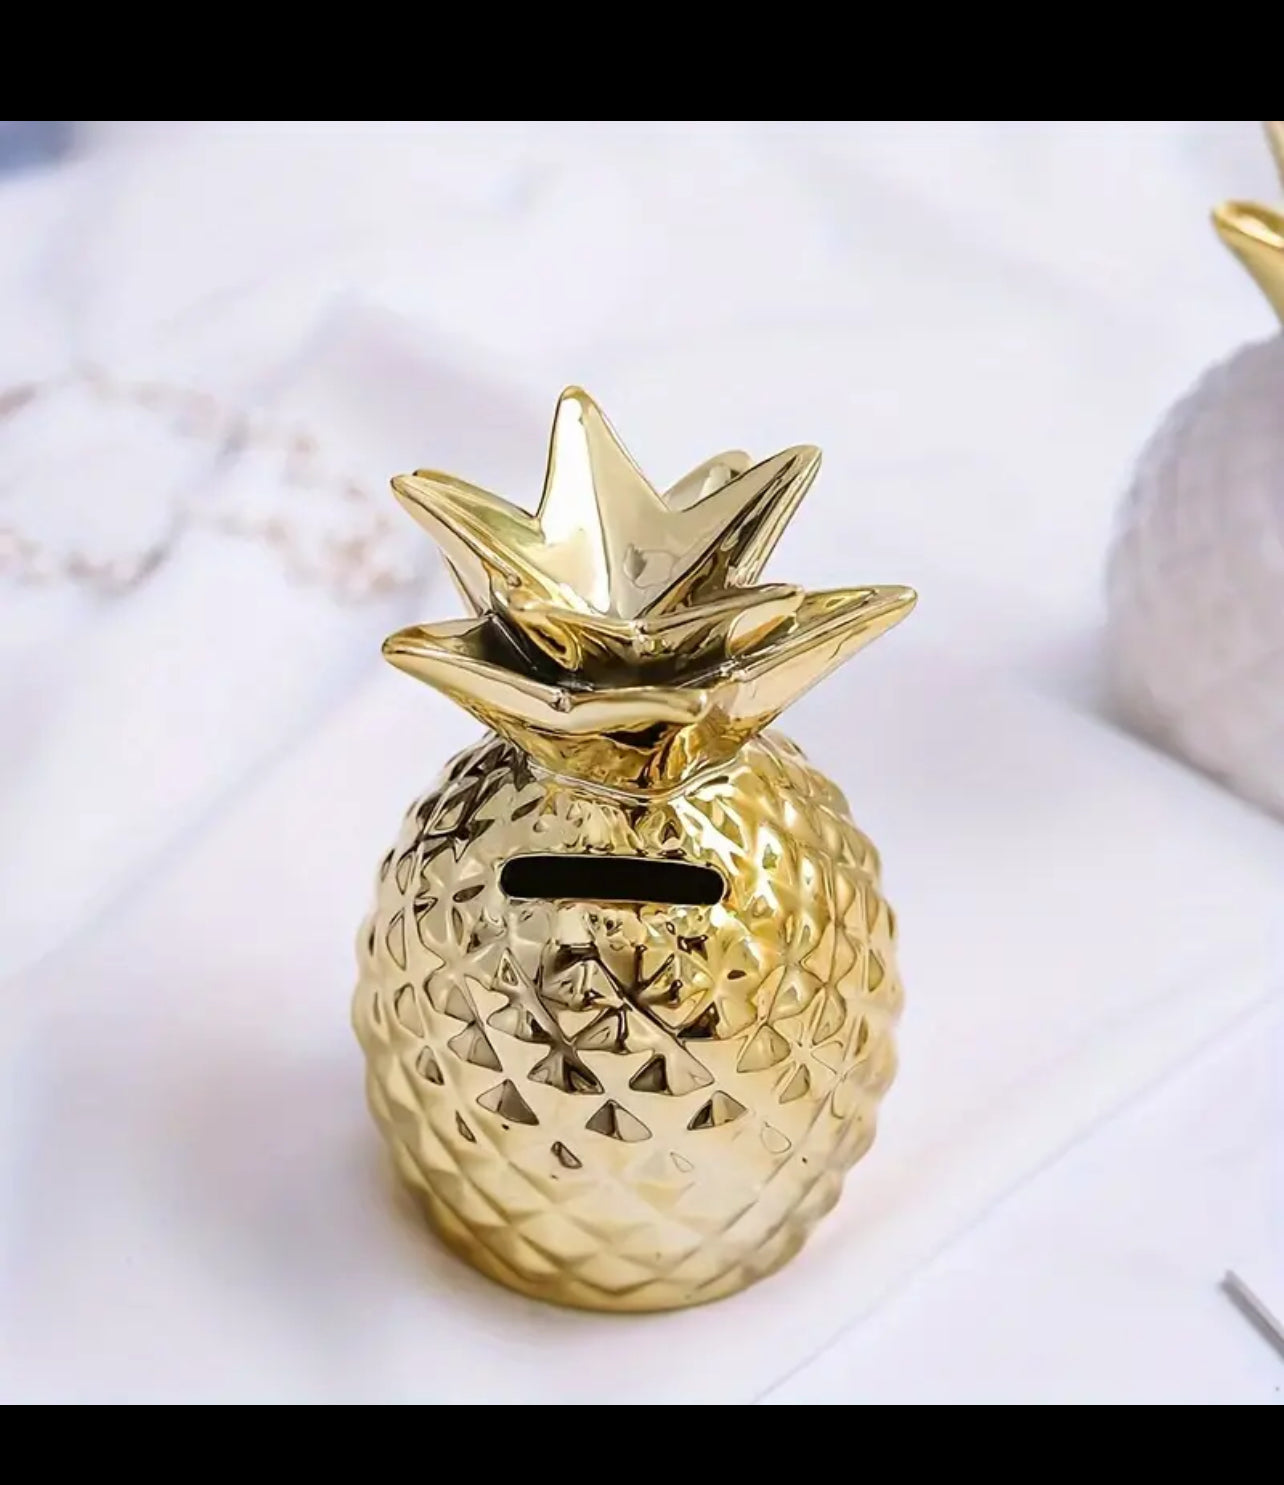 Golden Pineapple Ceramic Savings Bank Home, Desktop Decor